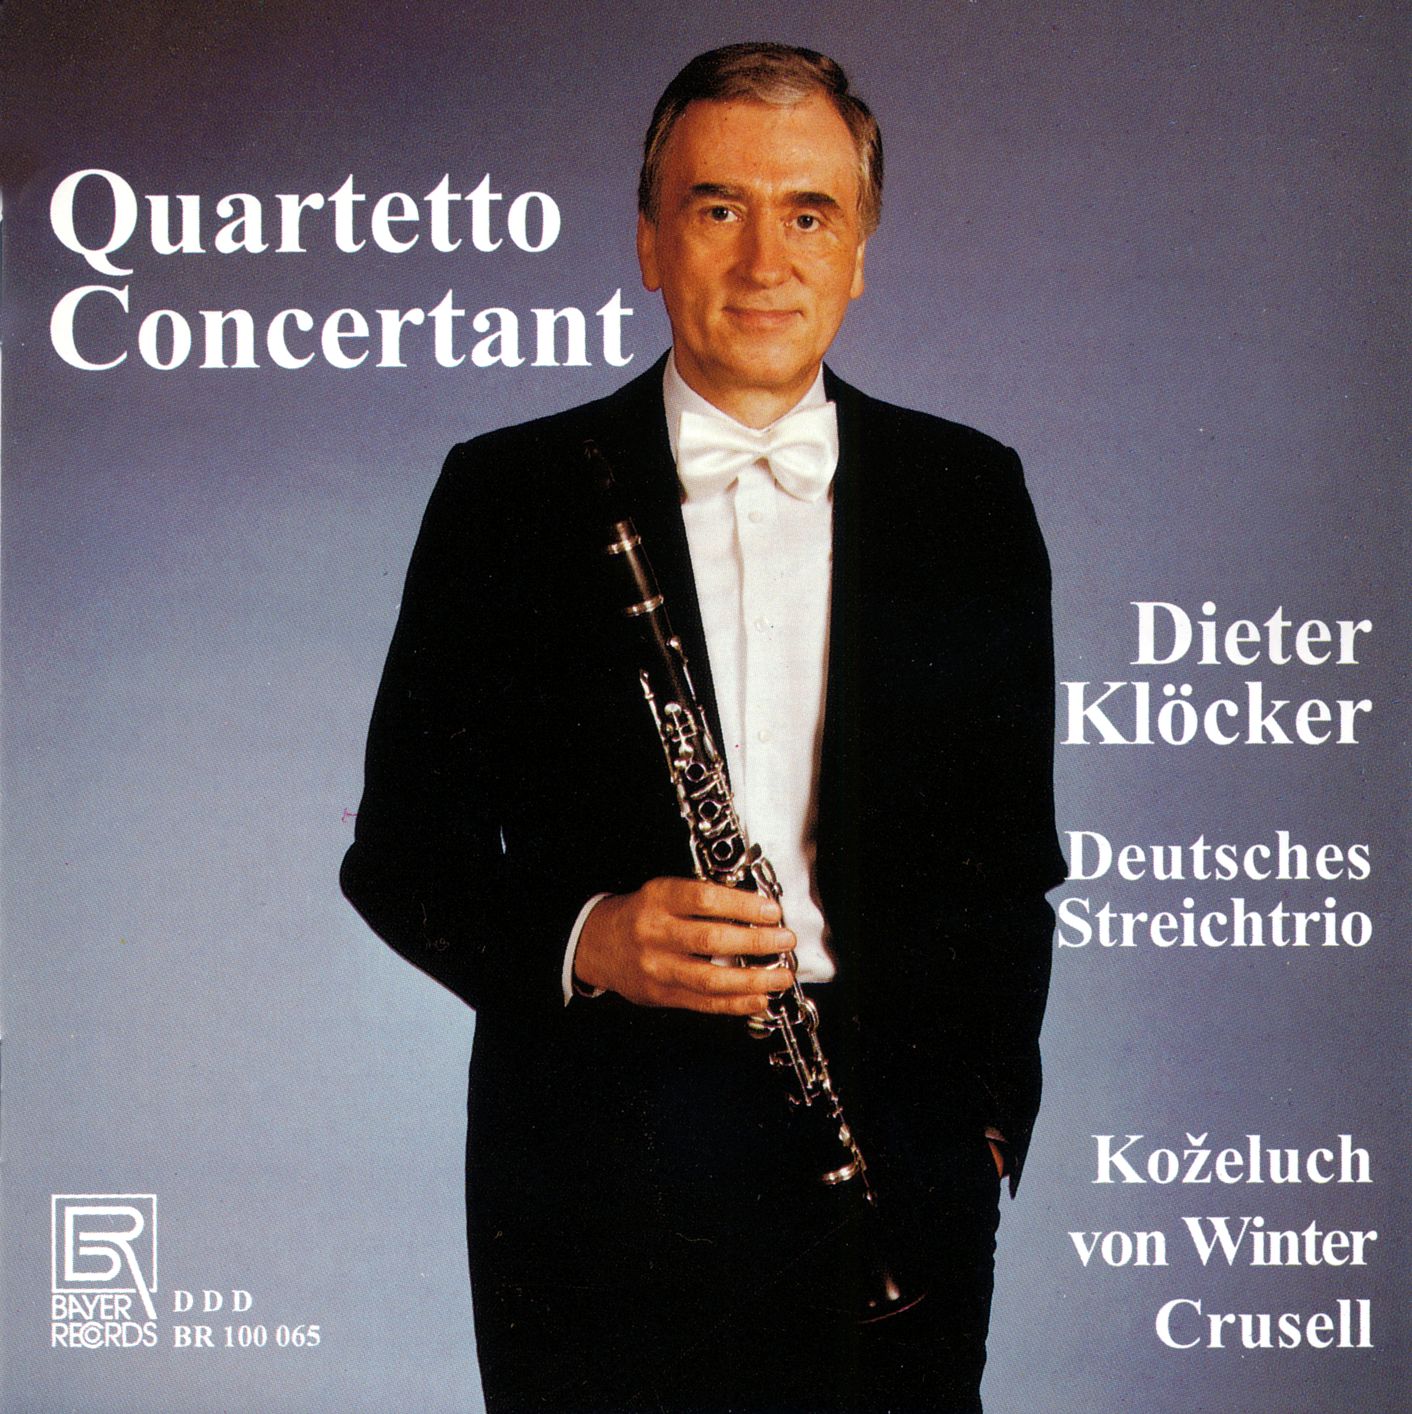 Quartetto Concertant